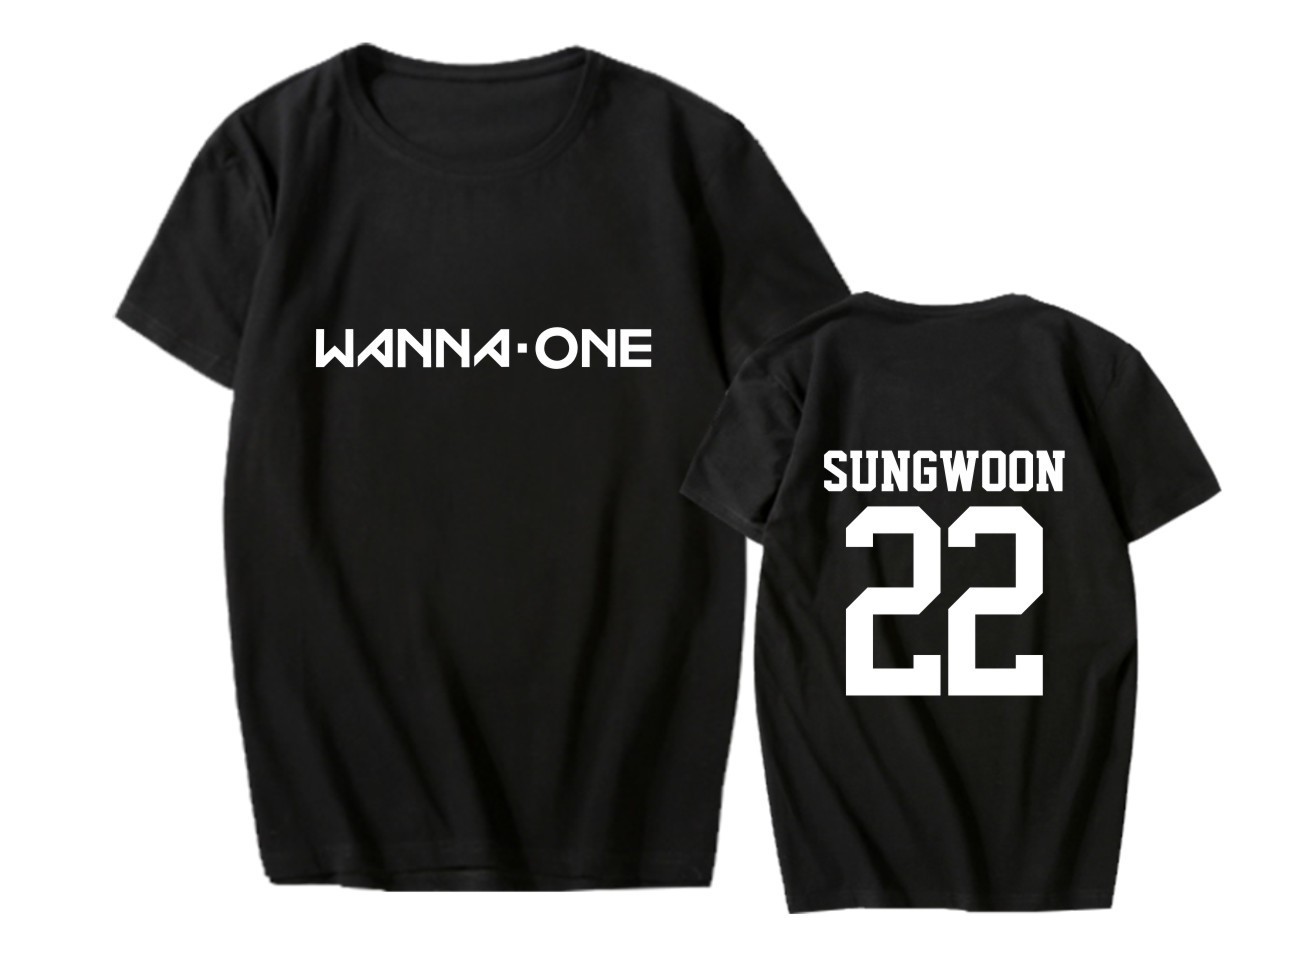 Wanna One Logo T-shirt - RunningMan Malaysia Store